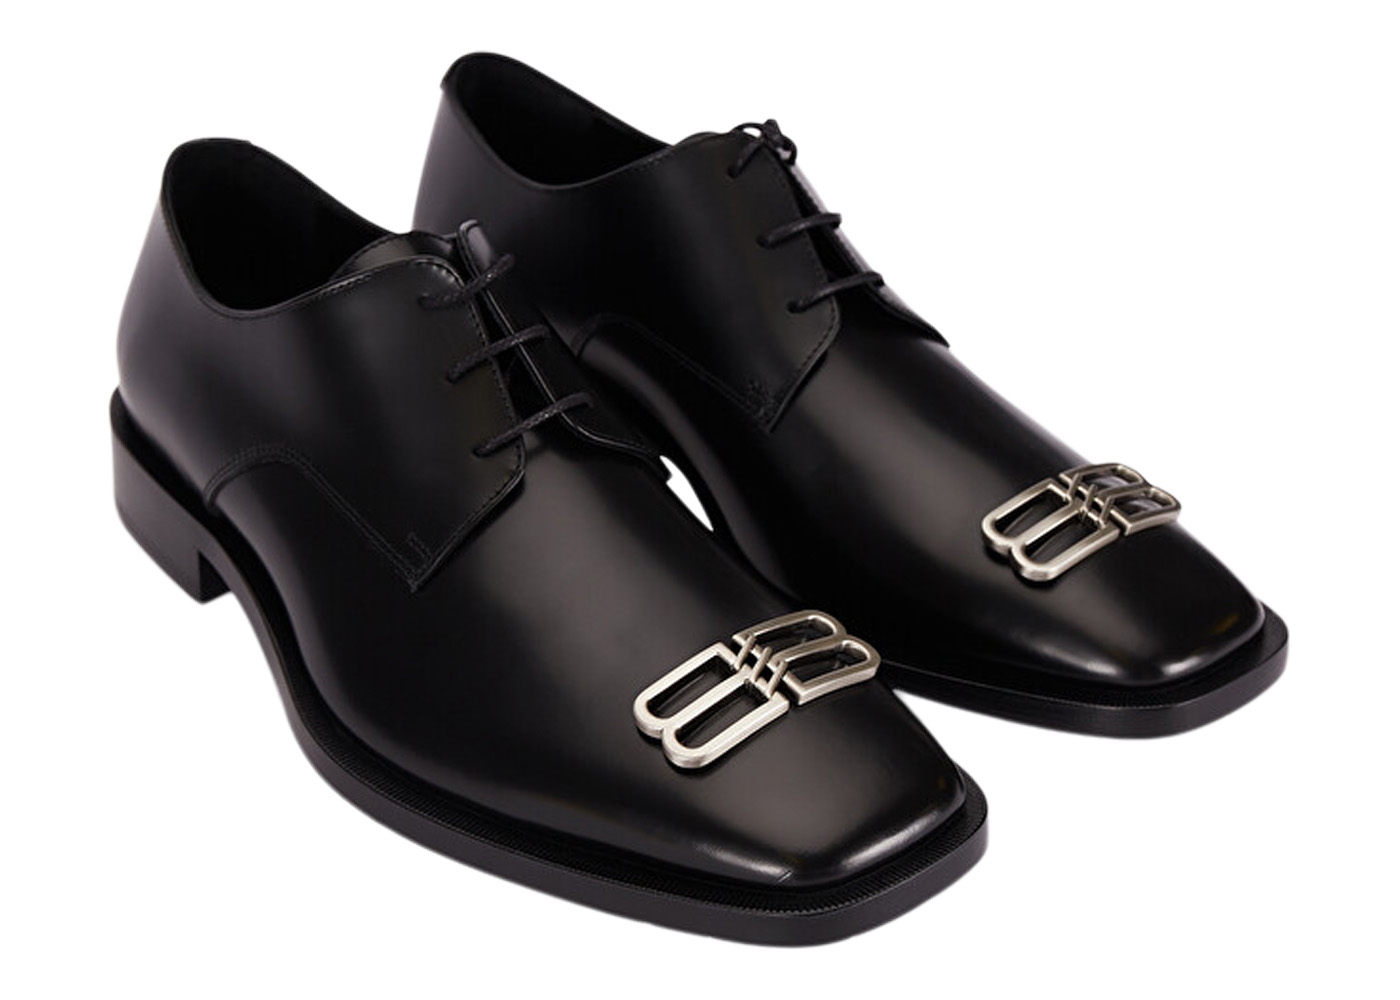 Balenciaga Rim Derby Shoes Black Leather メンズ - 712642WA8E11081 - JP